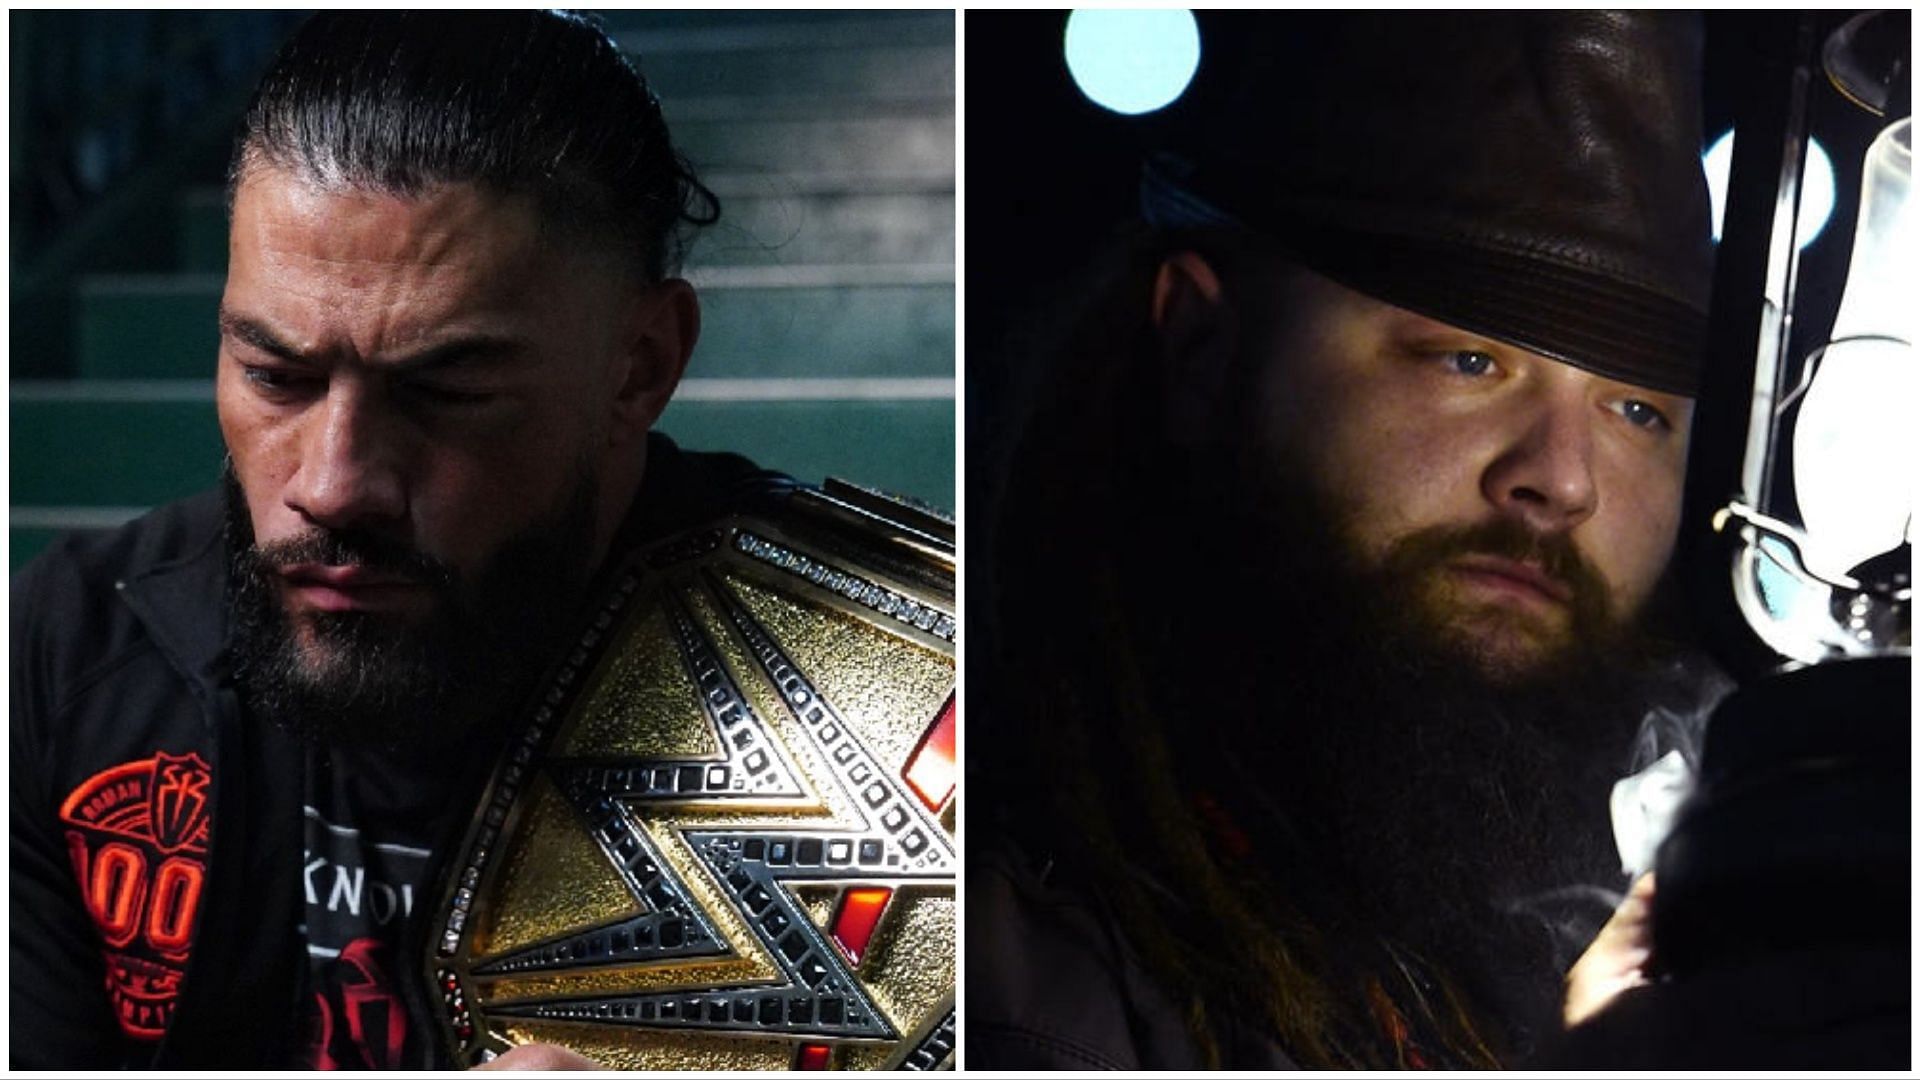 WWE Superstars Roman Reigns and Bray Wyatt